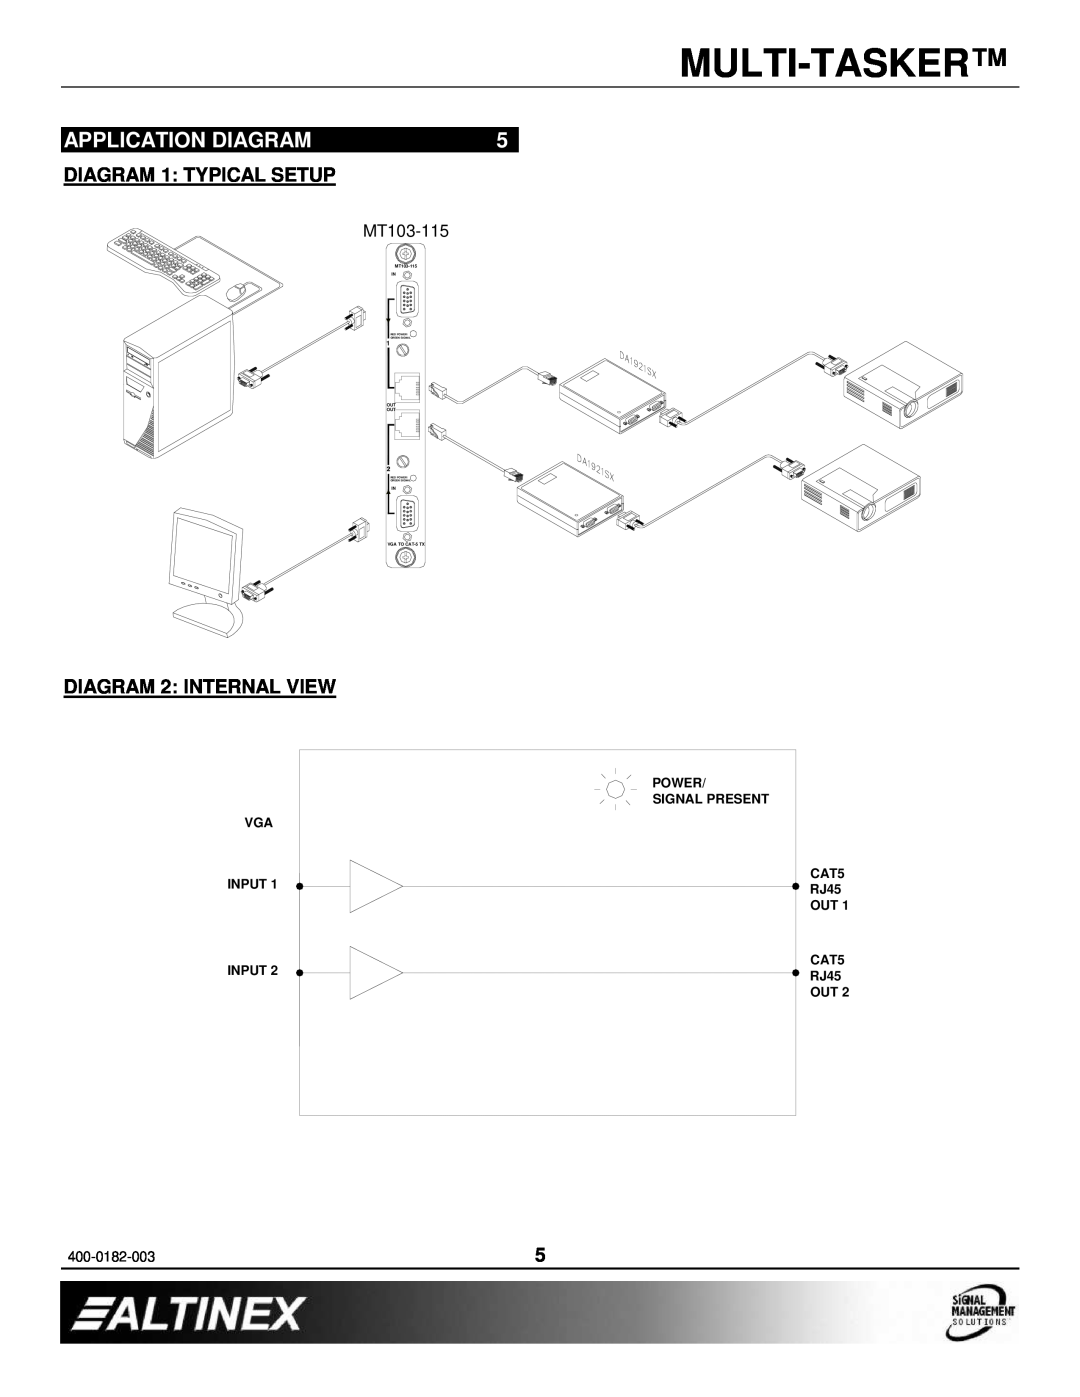 Altinex MT103-115 Application Diagram, DIAGRAM 1 TYPICAL SETUP, DIAGRAM 2 INTERNAL VIEW, Multi-Tasker, Power, Input, CAT5 